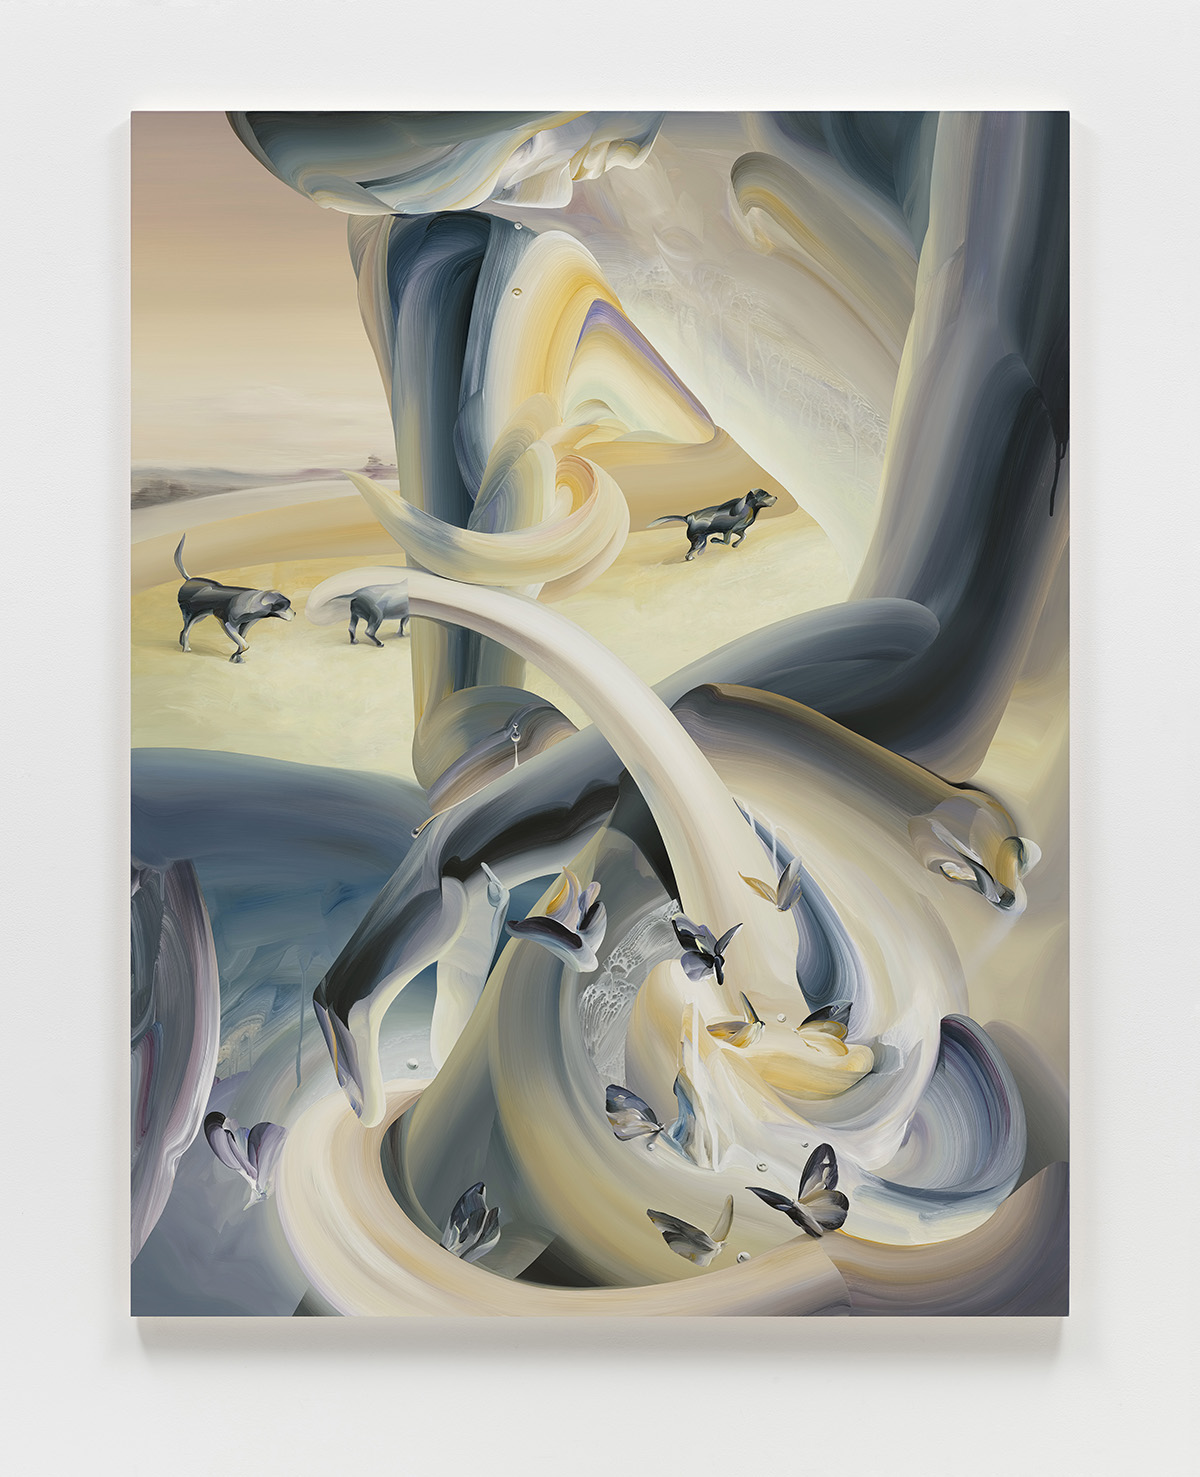 Huang Ko Wei, Rewind, 2021, acrylic on canvas
116 x 91 cm